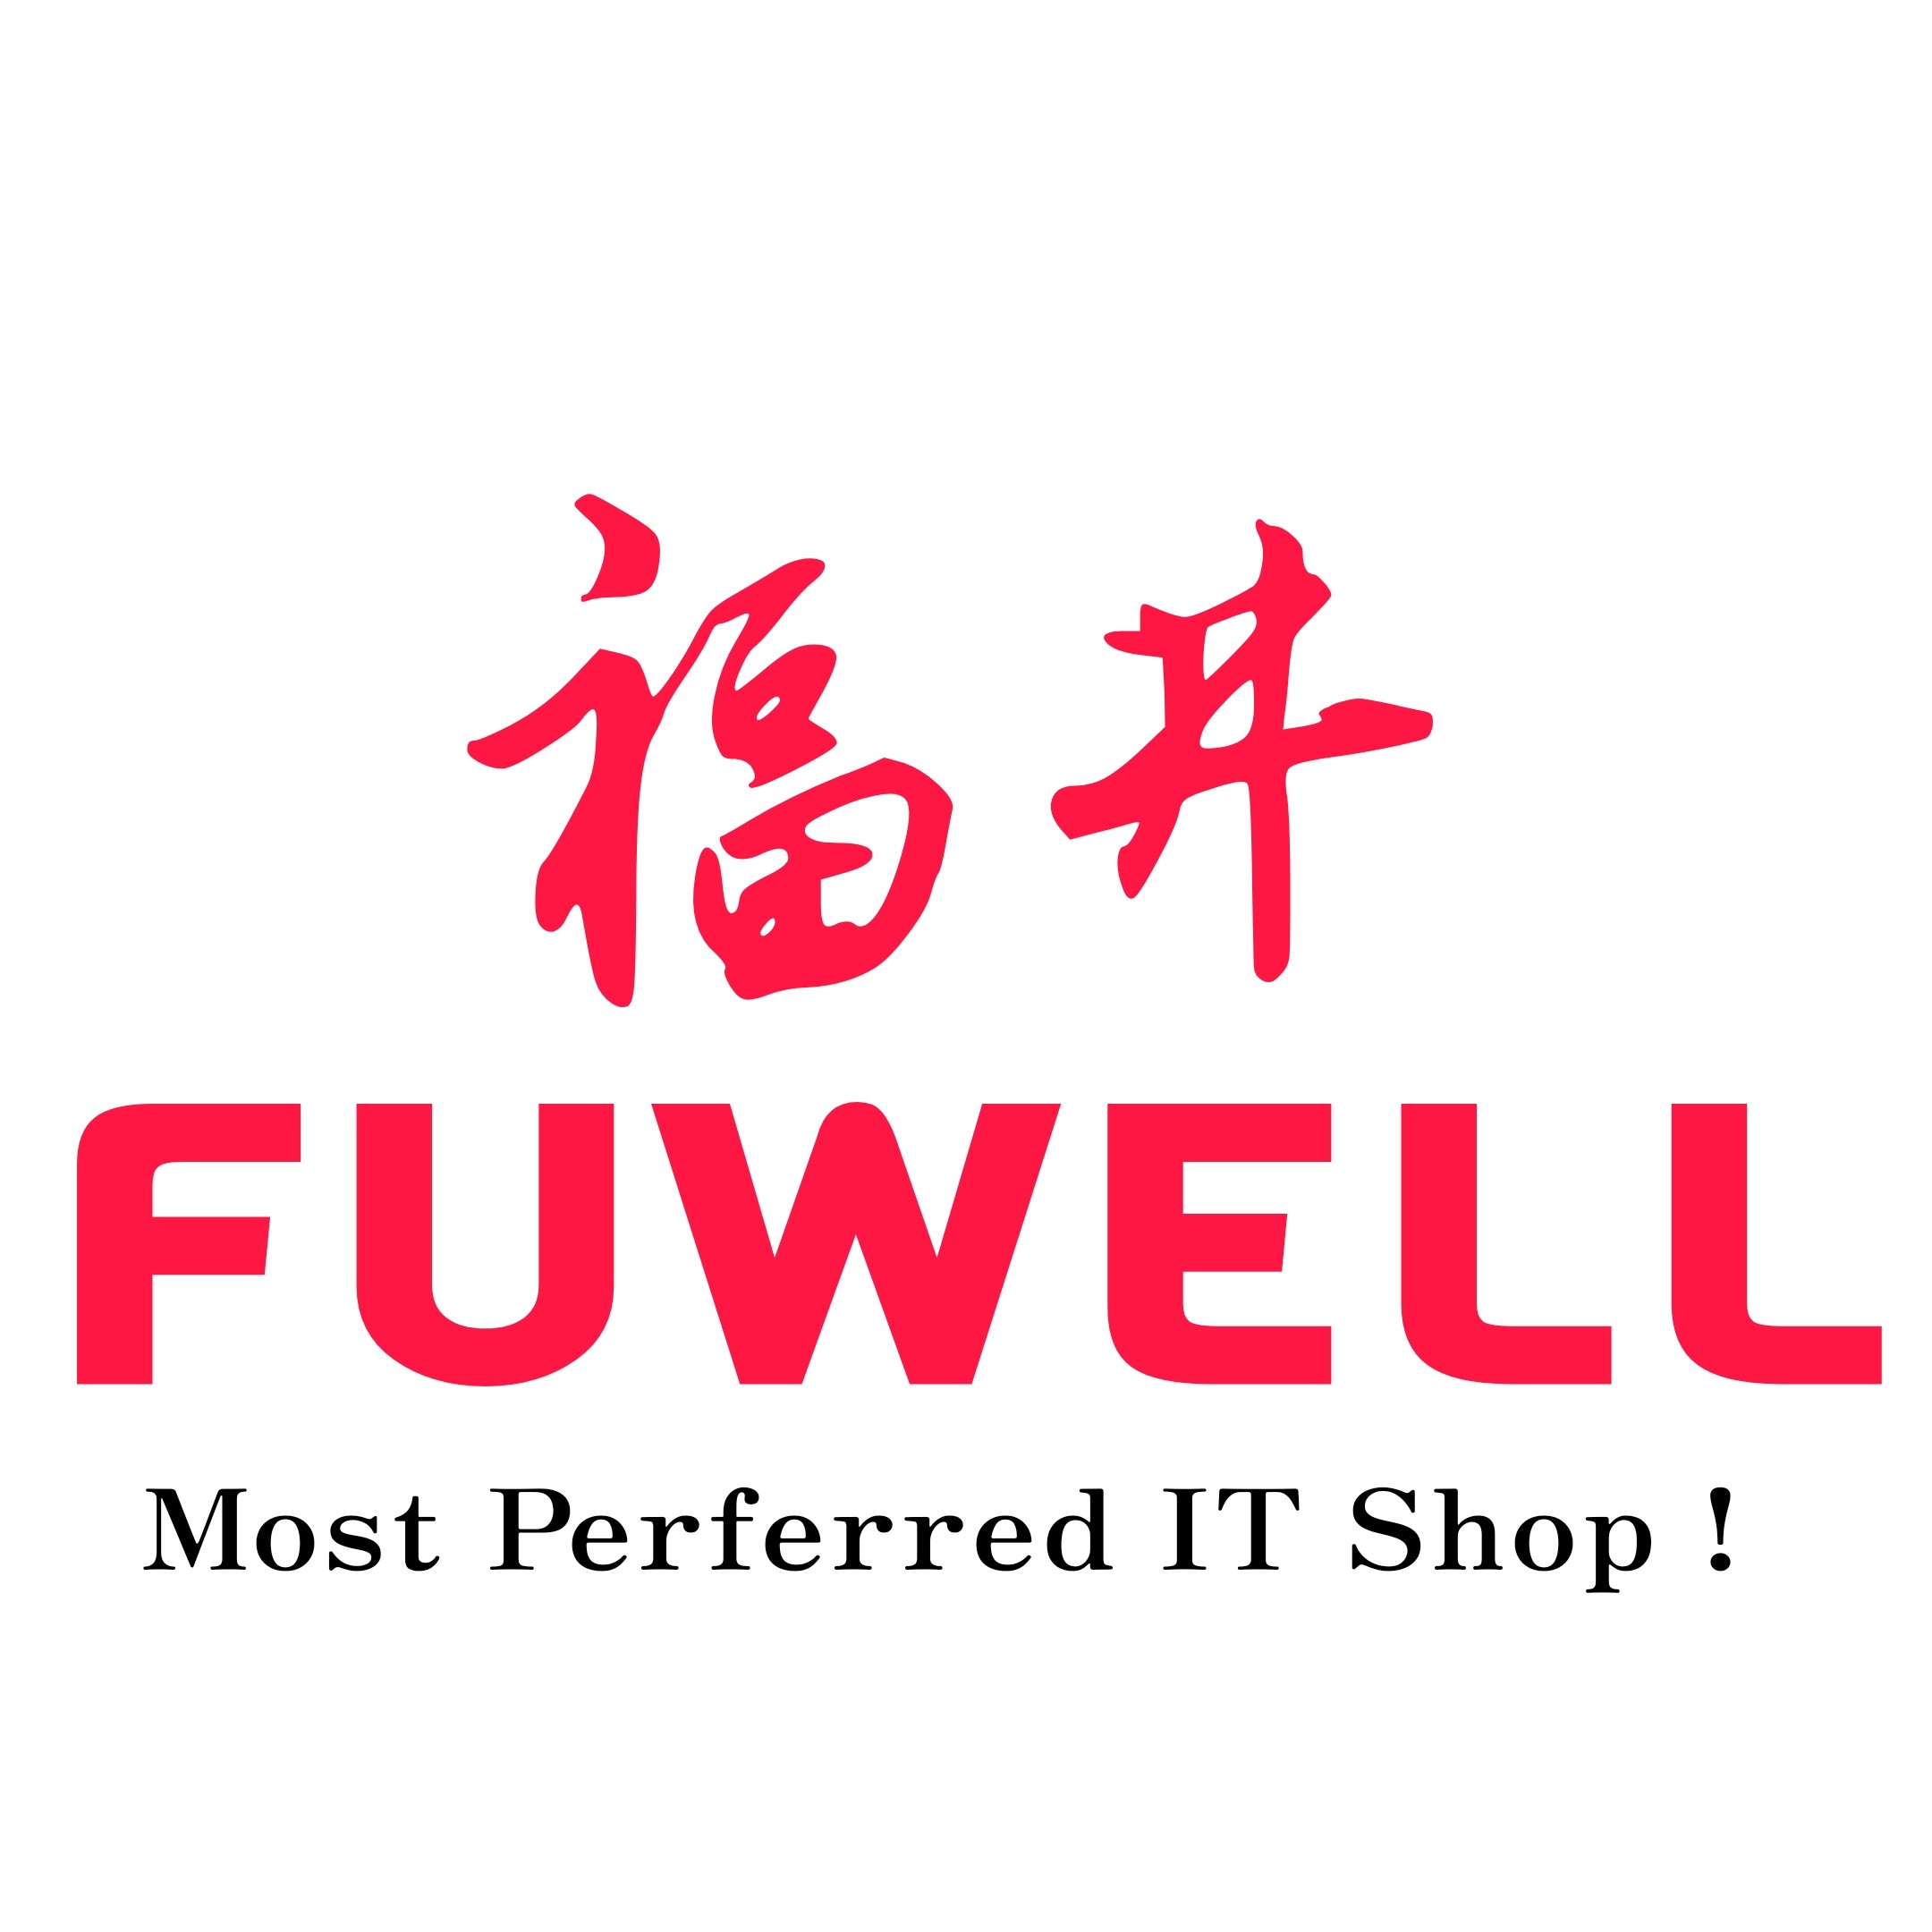 Fuwell